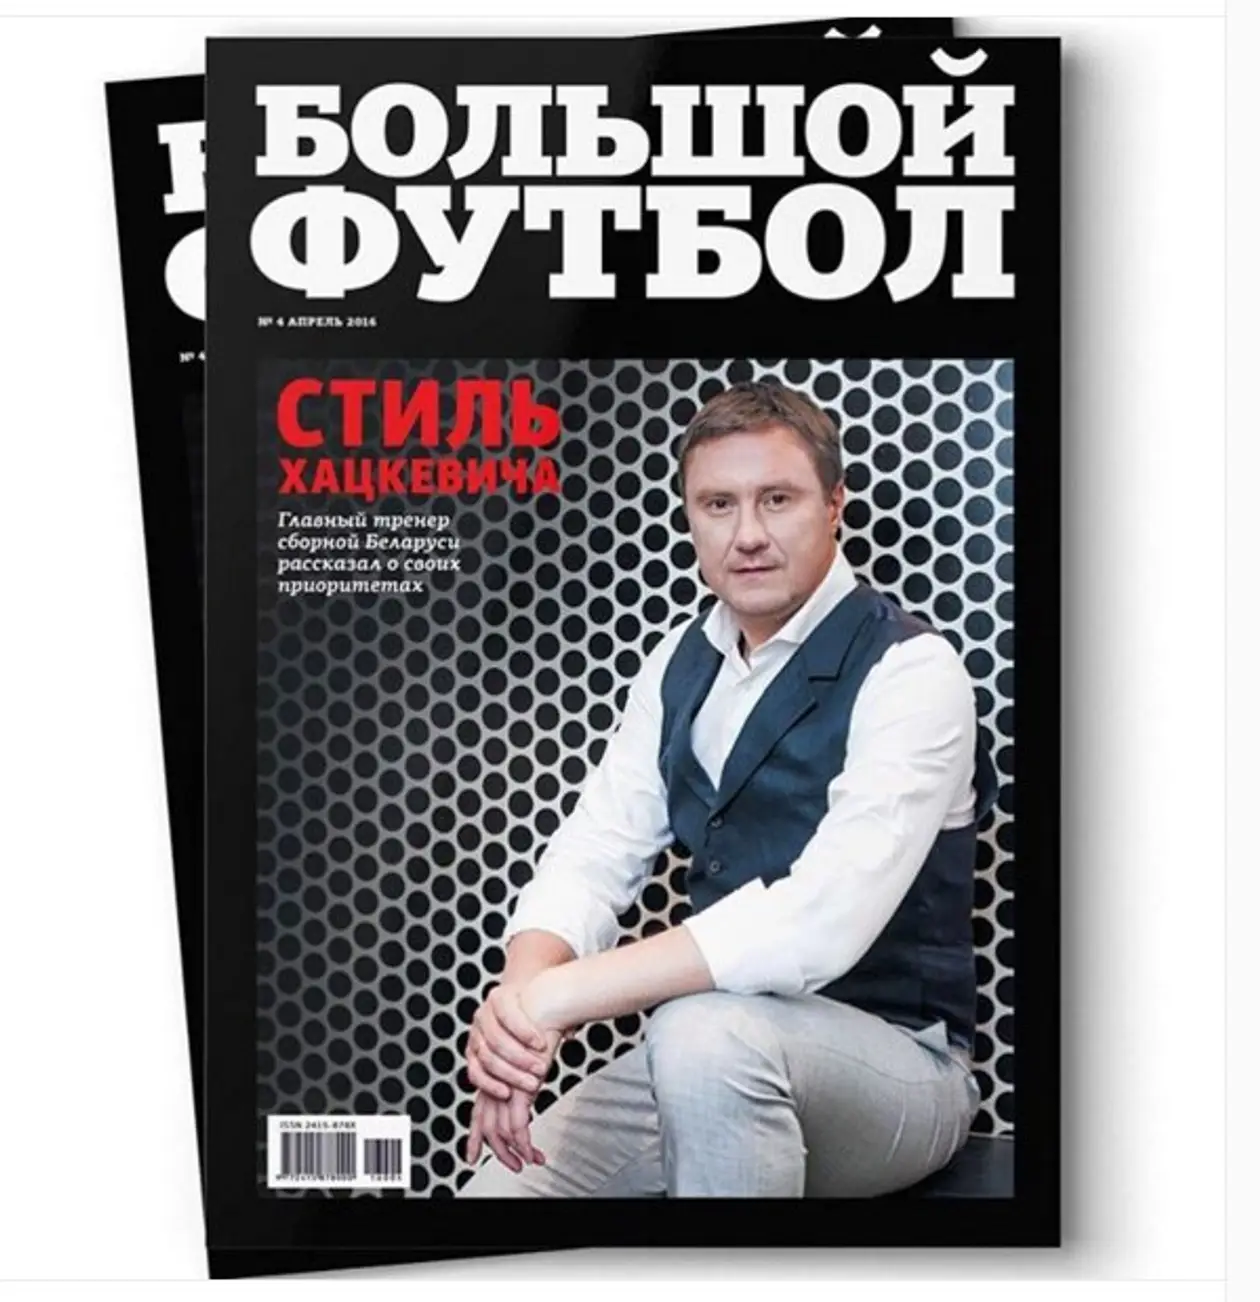 Александр Хацкевич на обложке журнала «Большой футбол»